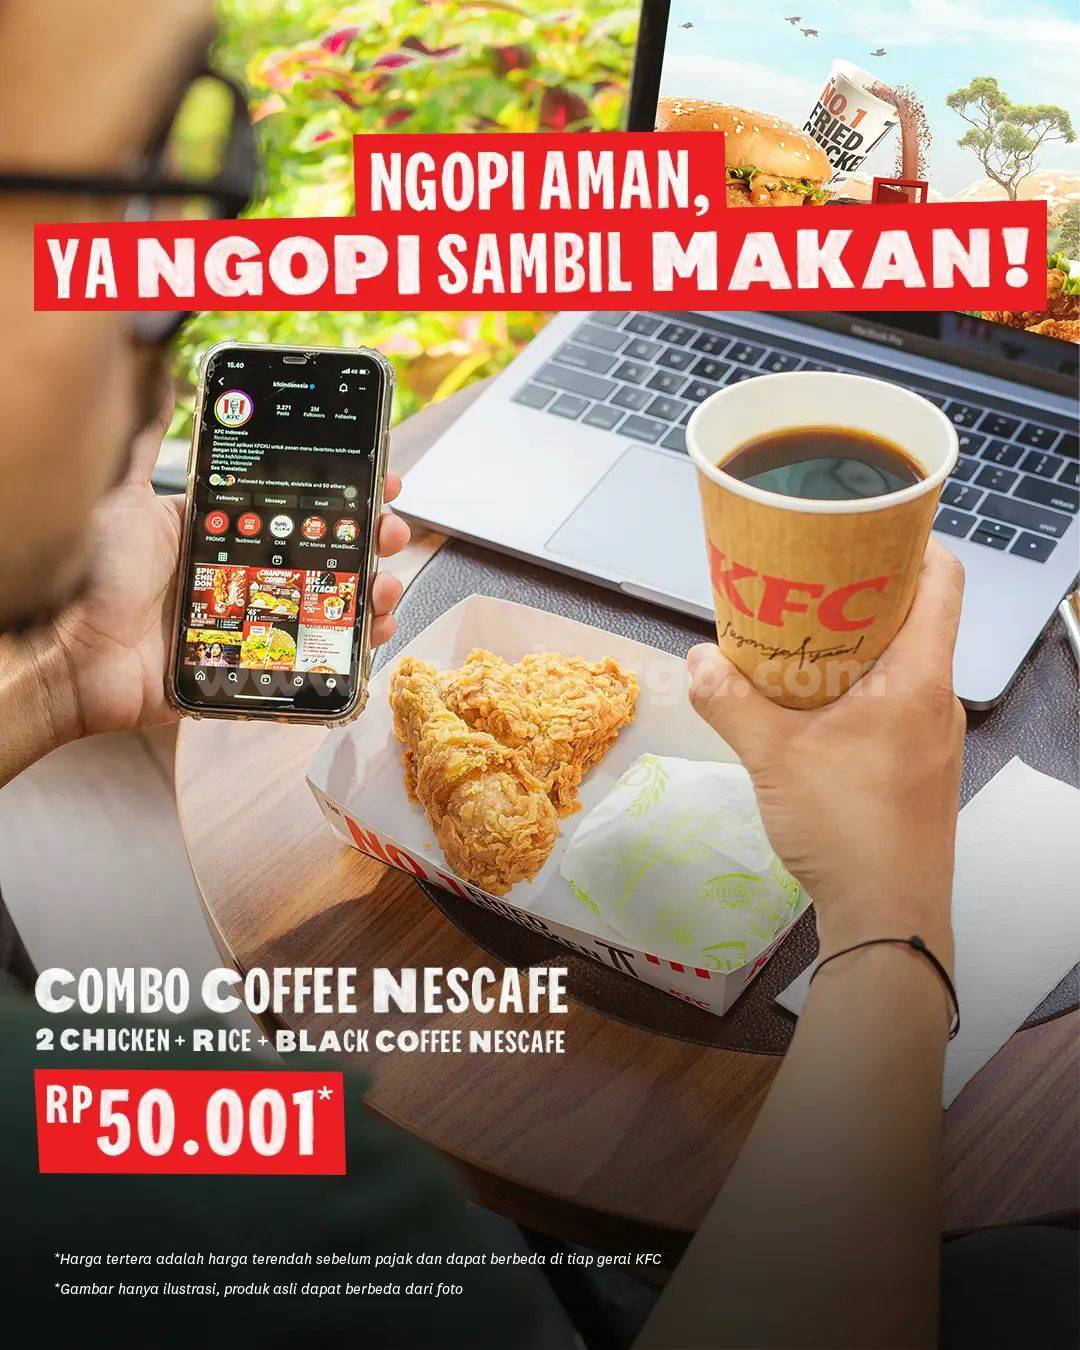 Promo KFC COMBO COFFEE NESCAFE + Paket 2 Ayam + Nasi hanya Rp. 50.001